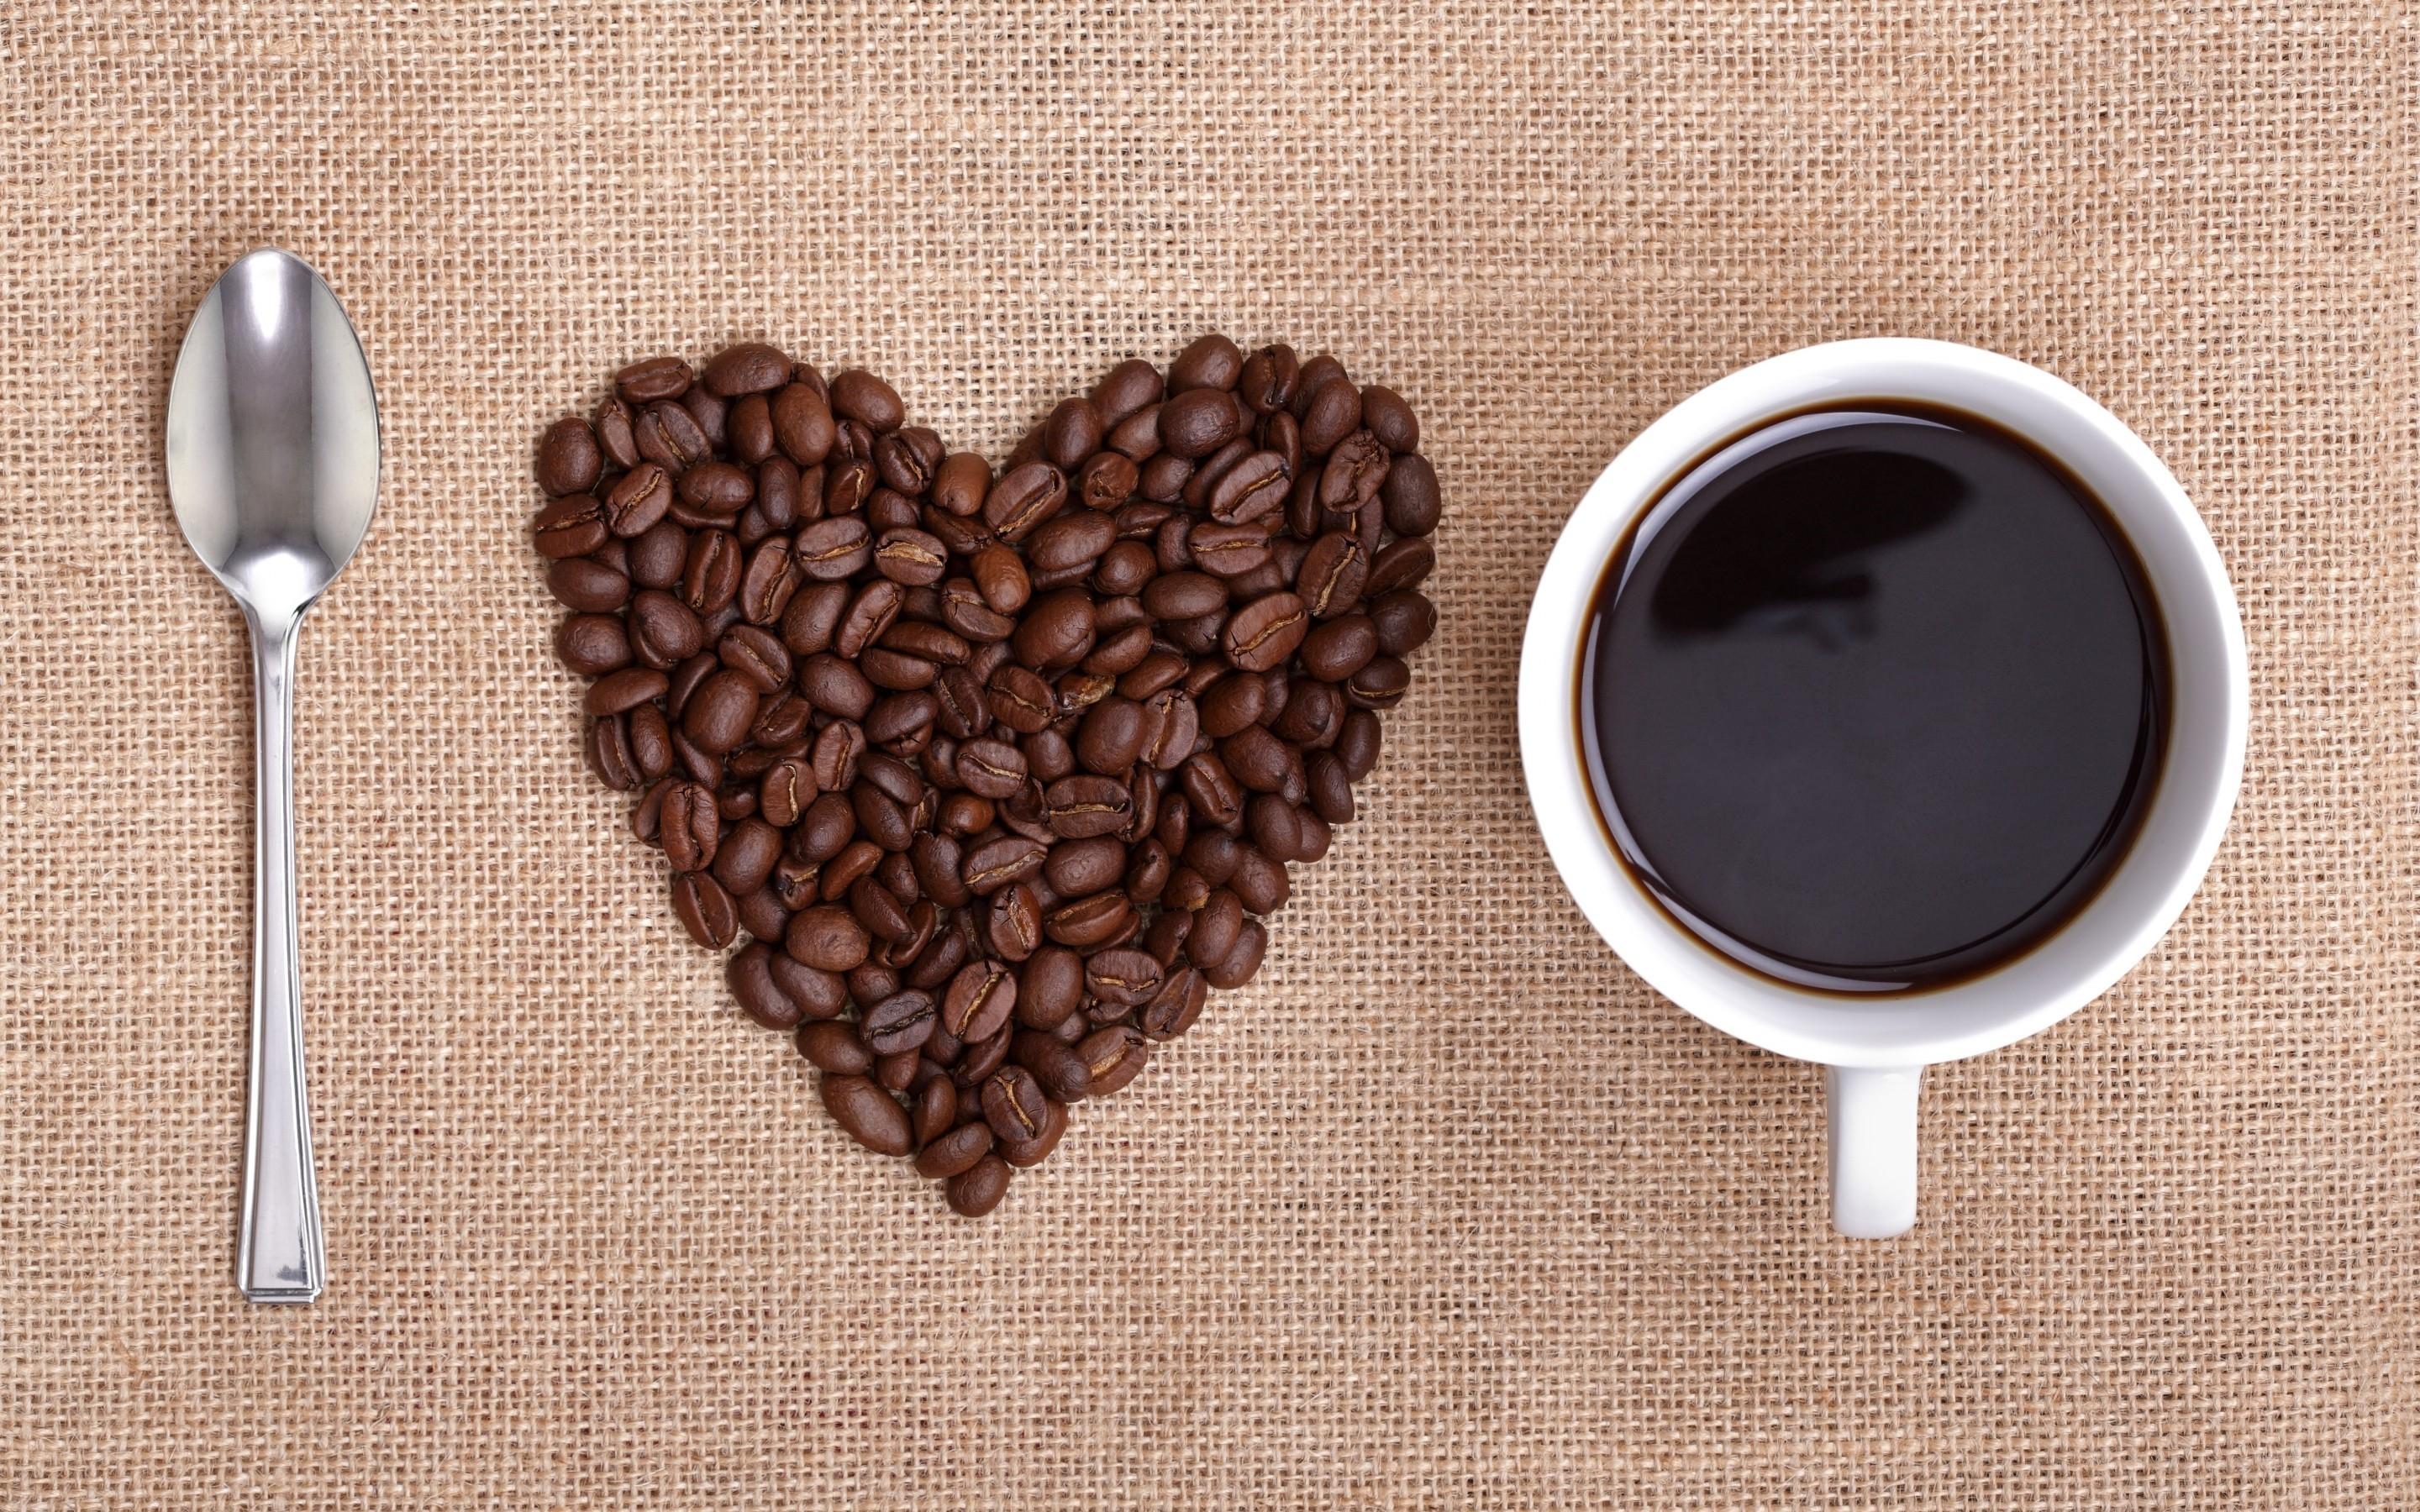 I Love Coffee, HD Artist, 4k Wallpaper, Image, Background